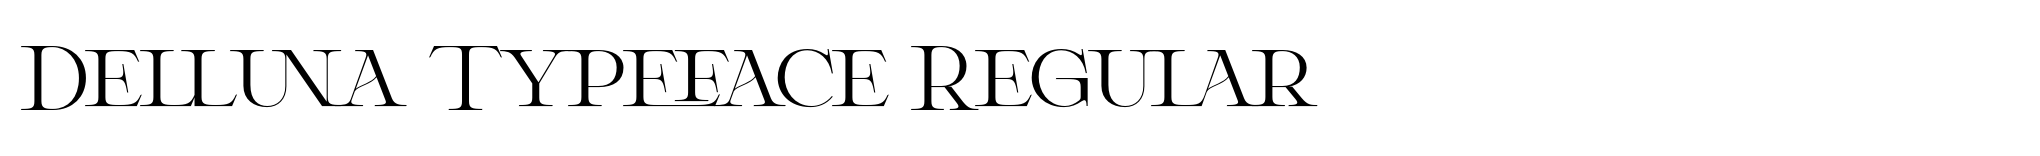 Delluna Typeface Regular image